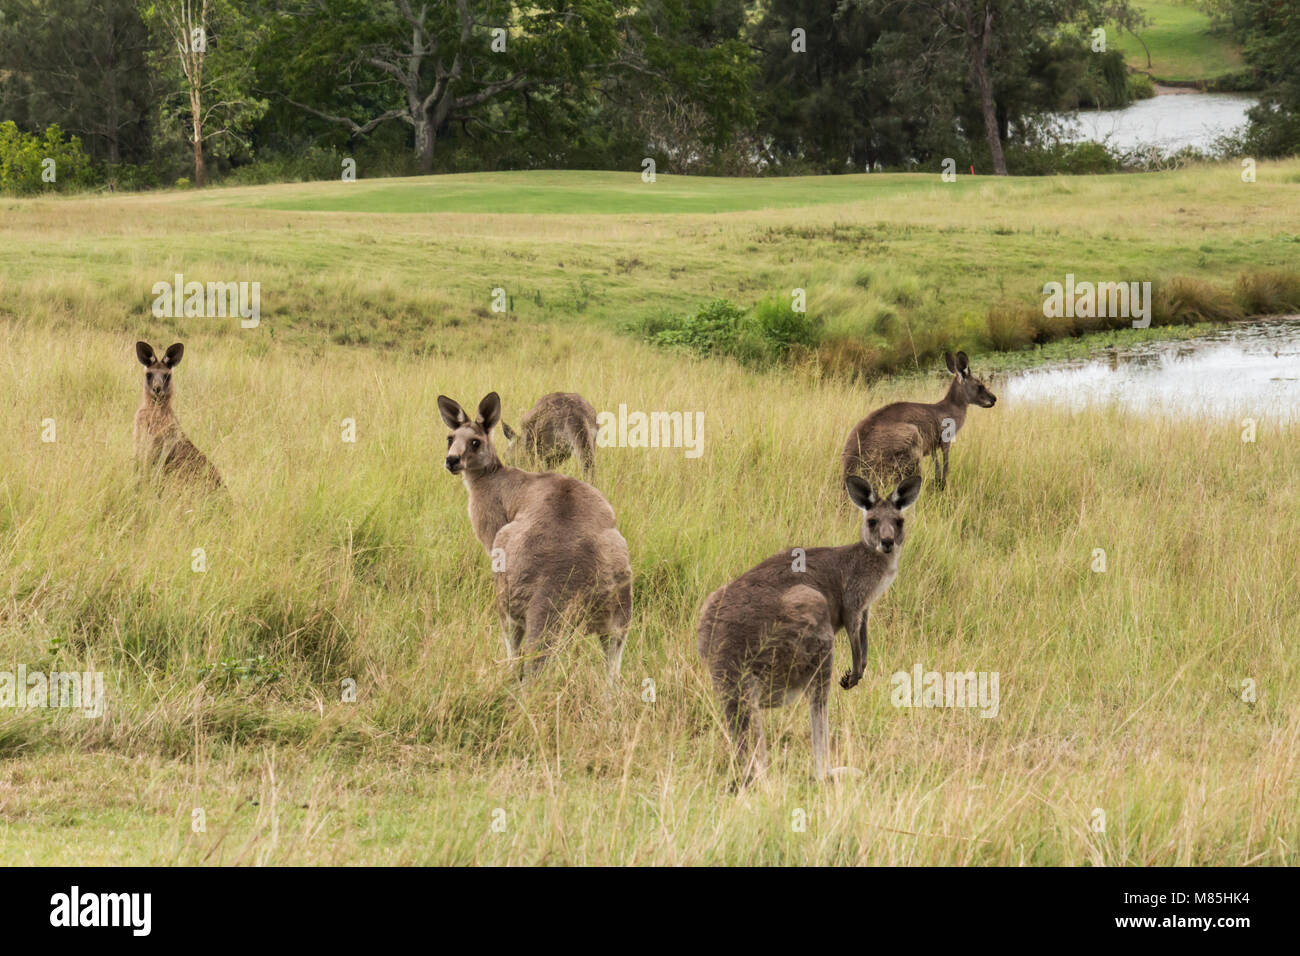 Group of Australian kangaroos in grass field next to lake Stock Photo